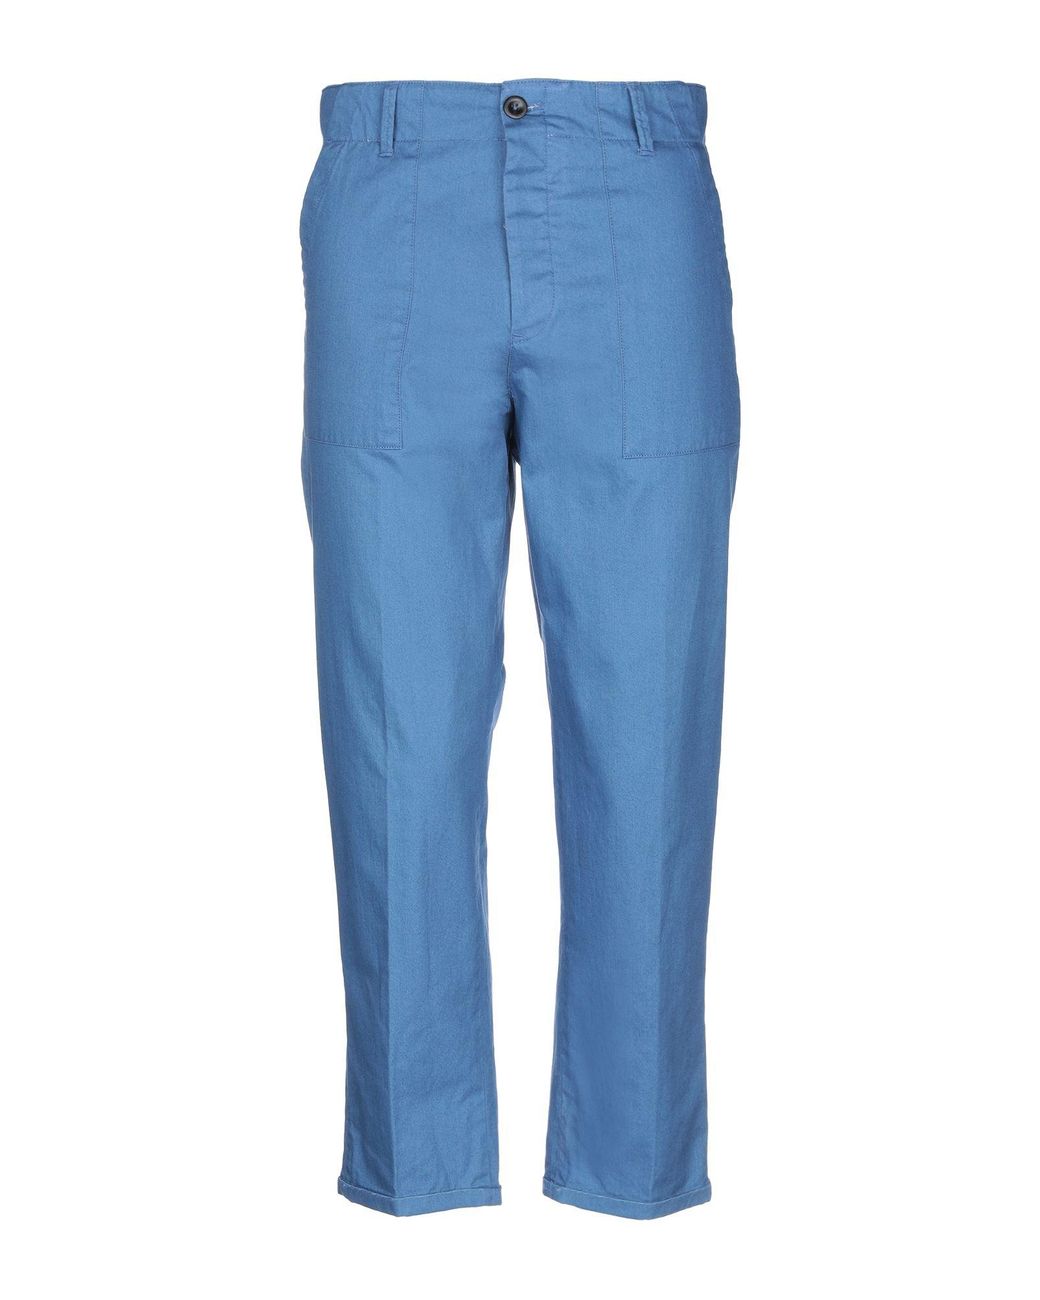 PT01 Cotton Casual Pants in Pastel Blue (Blue) for Men - Lyst